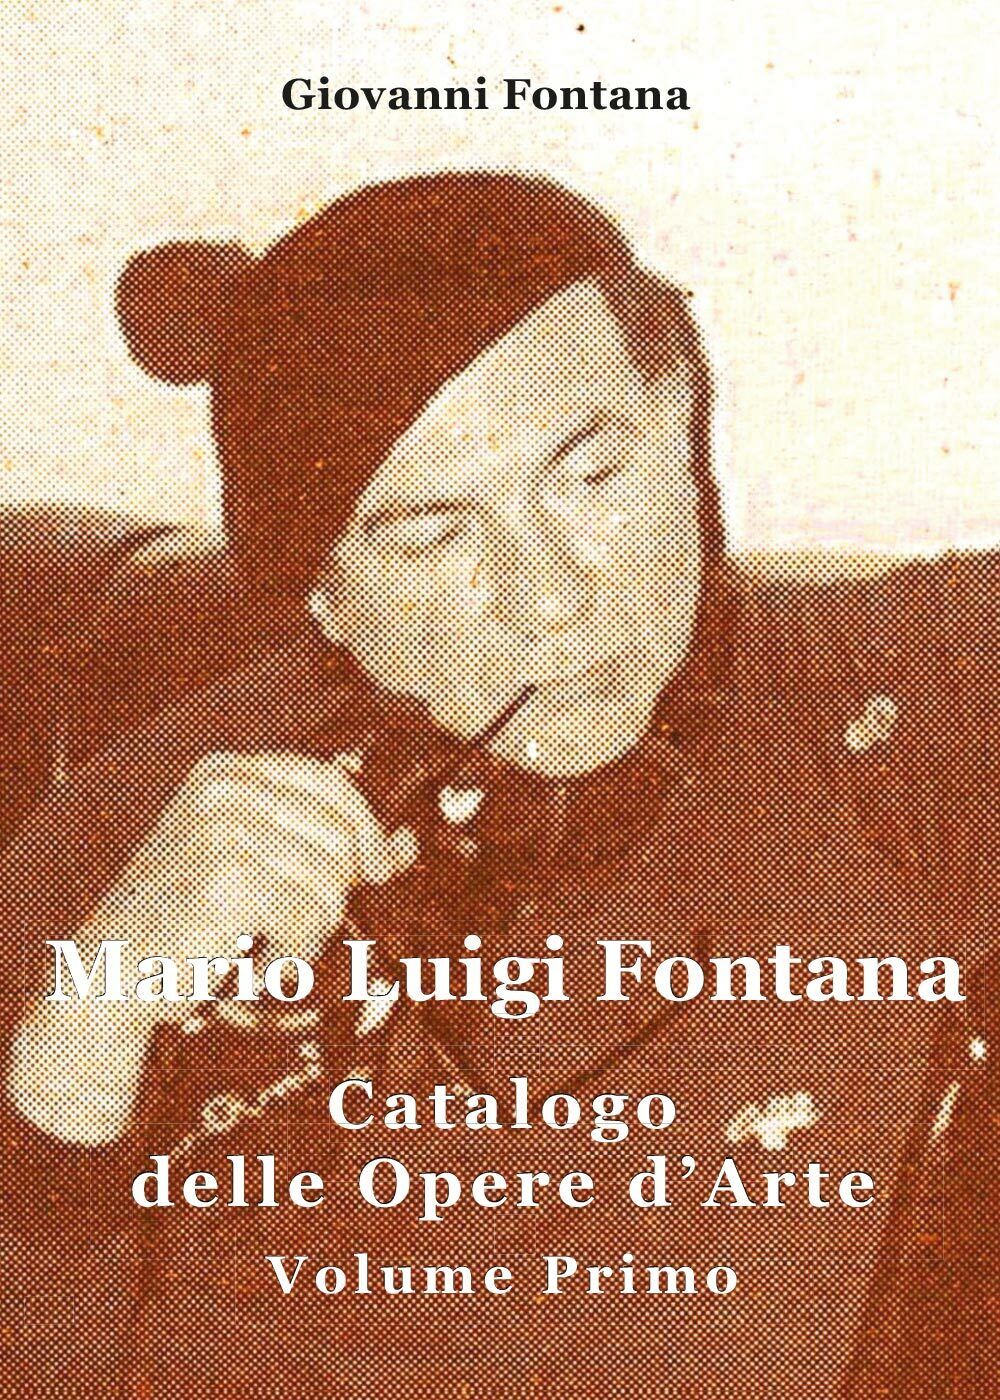 Mario Luigi Fontana. Catalogo delle opere d'arte. Volume Primo  - ER